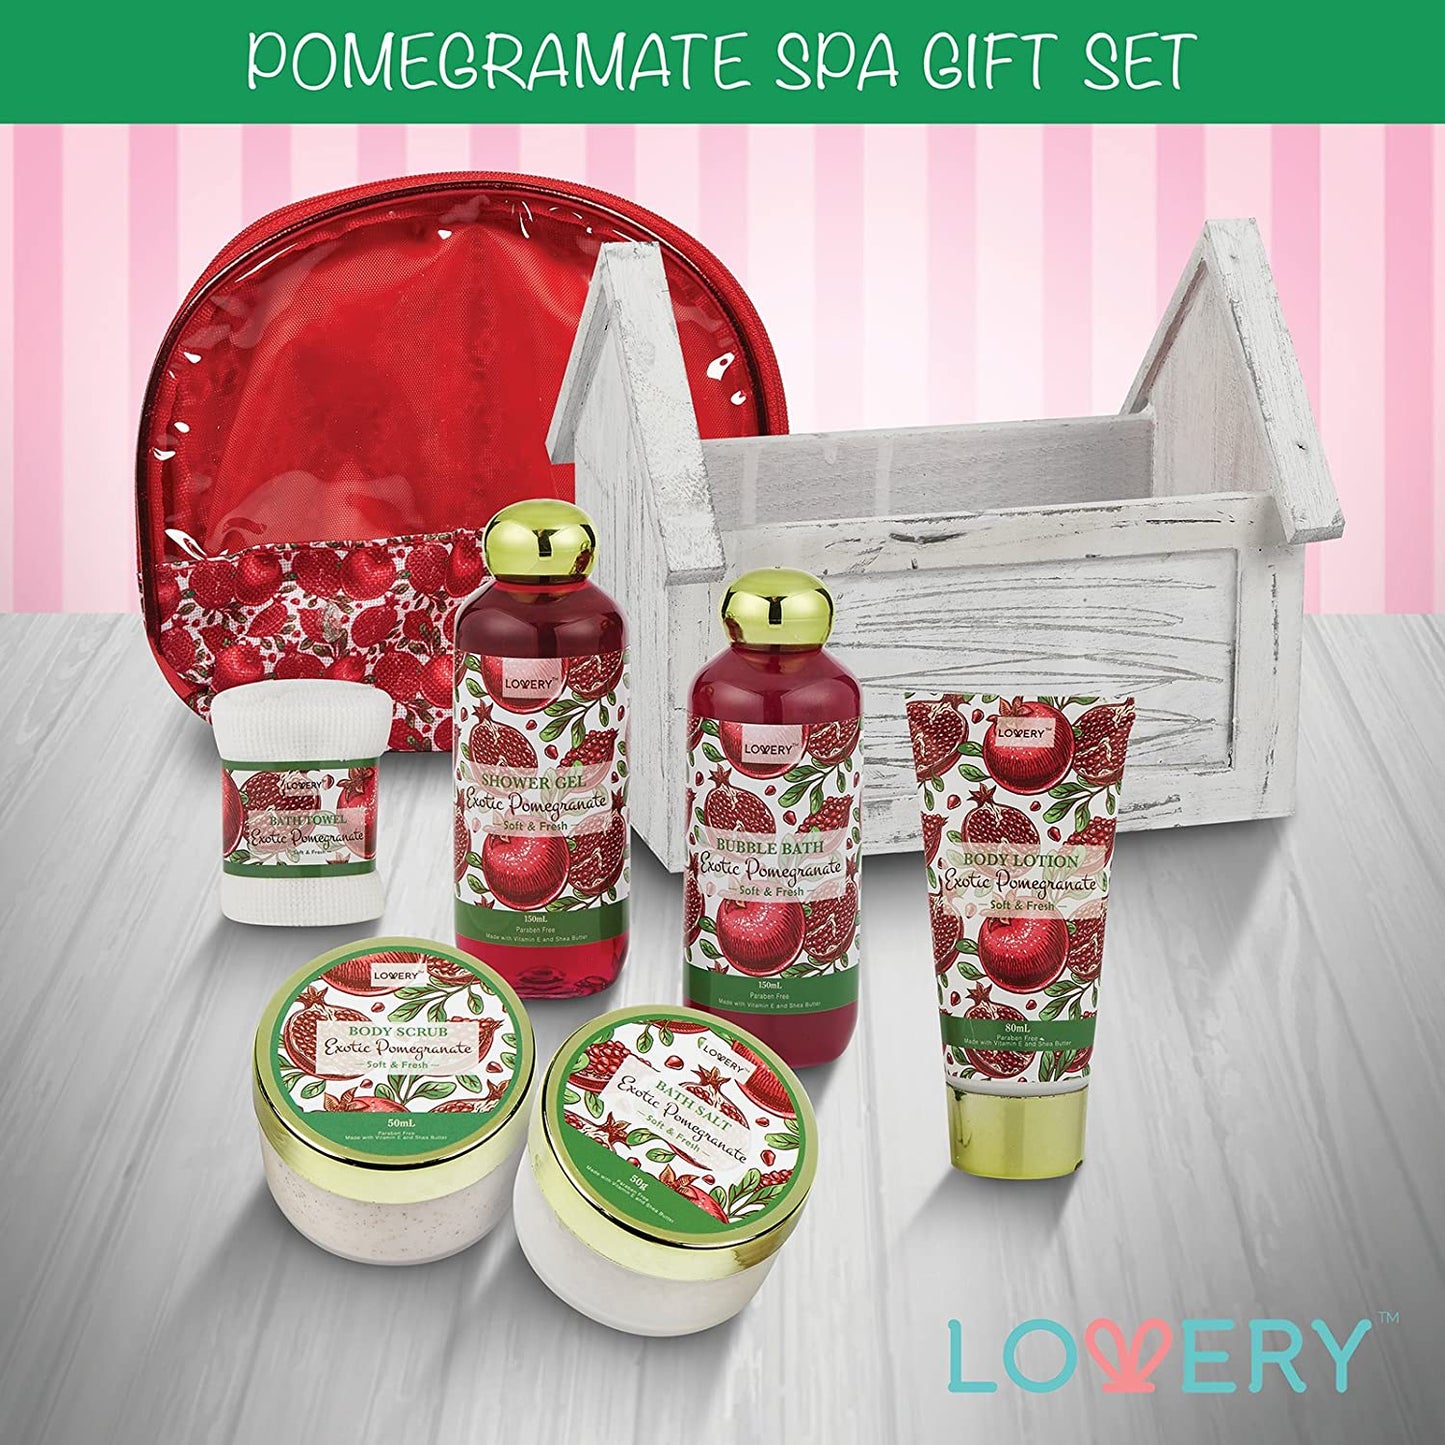 Exotic Pomegranate Home Bath Gift Set - 8Pc Spa Kit